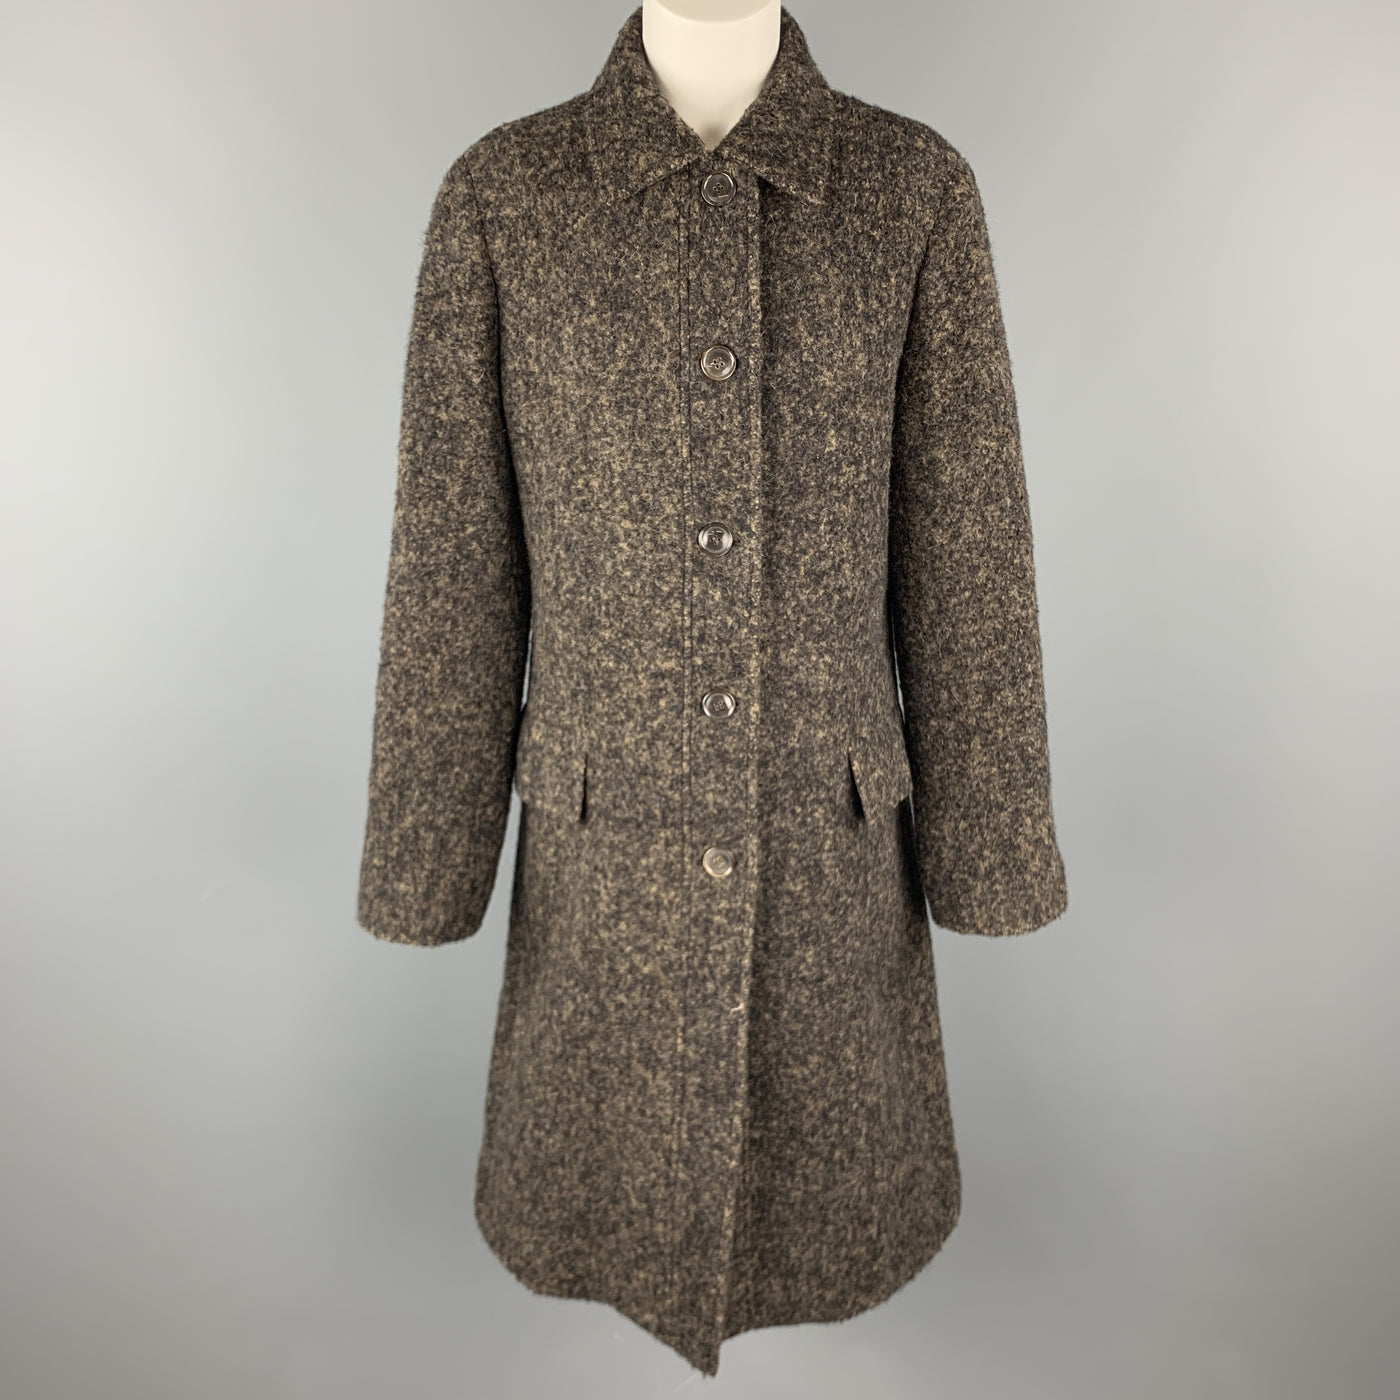 LUCIANO BARBERA Size 10 Brown & Black Marbled Alpaca Blend Coat